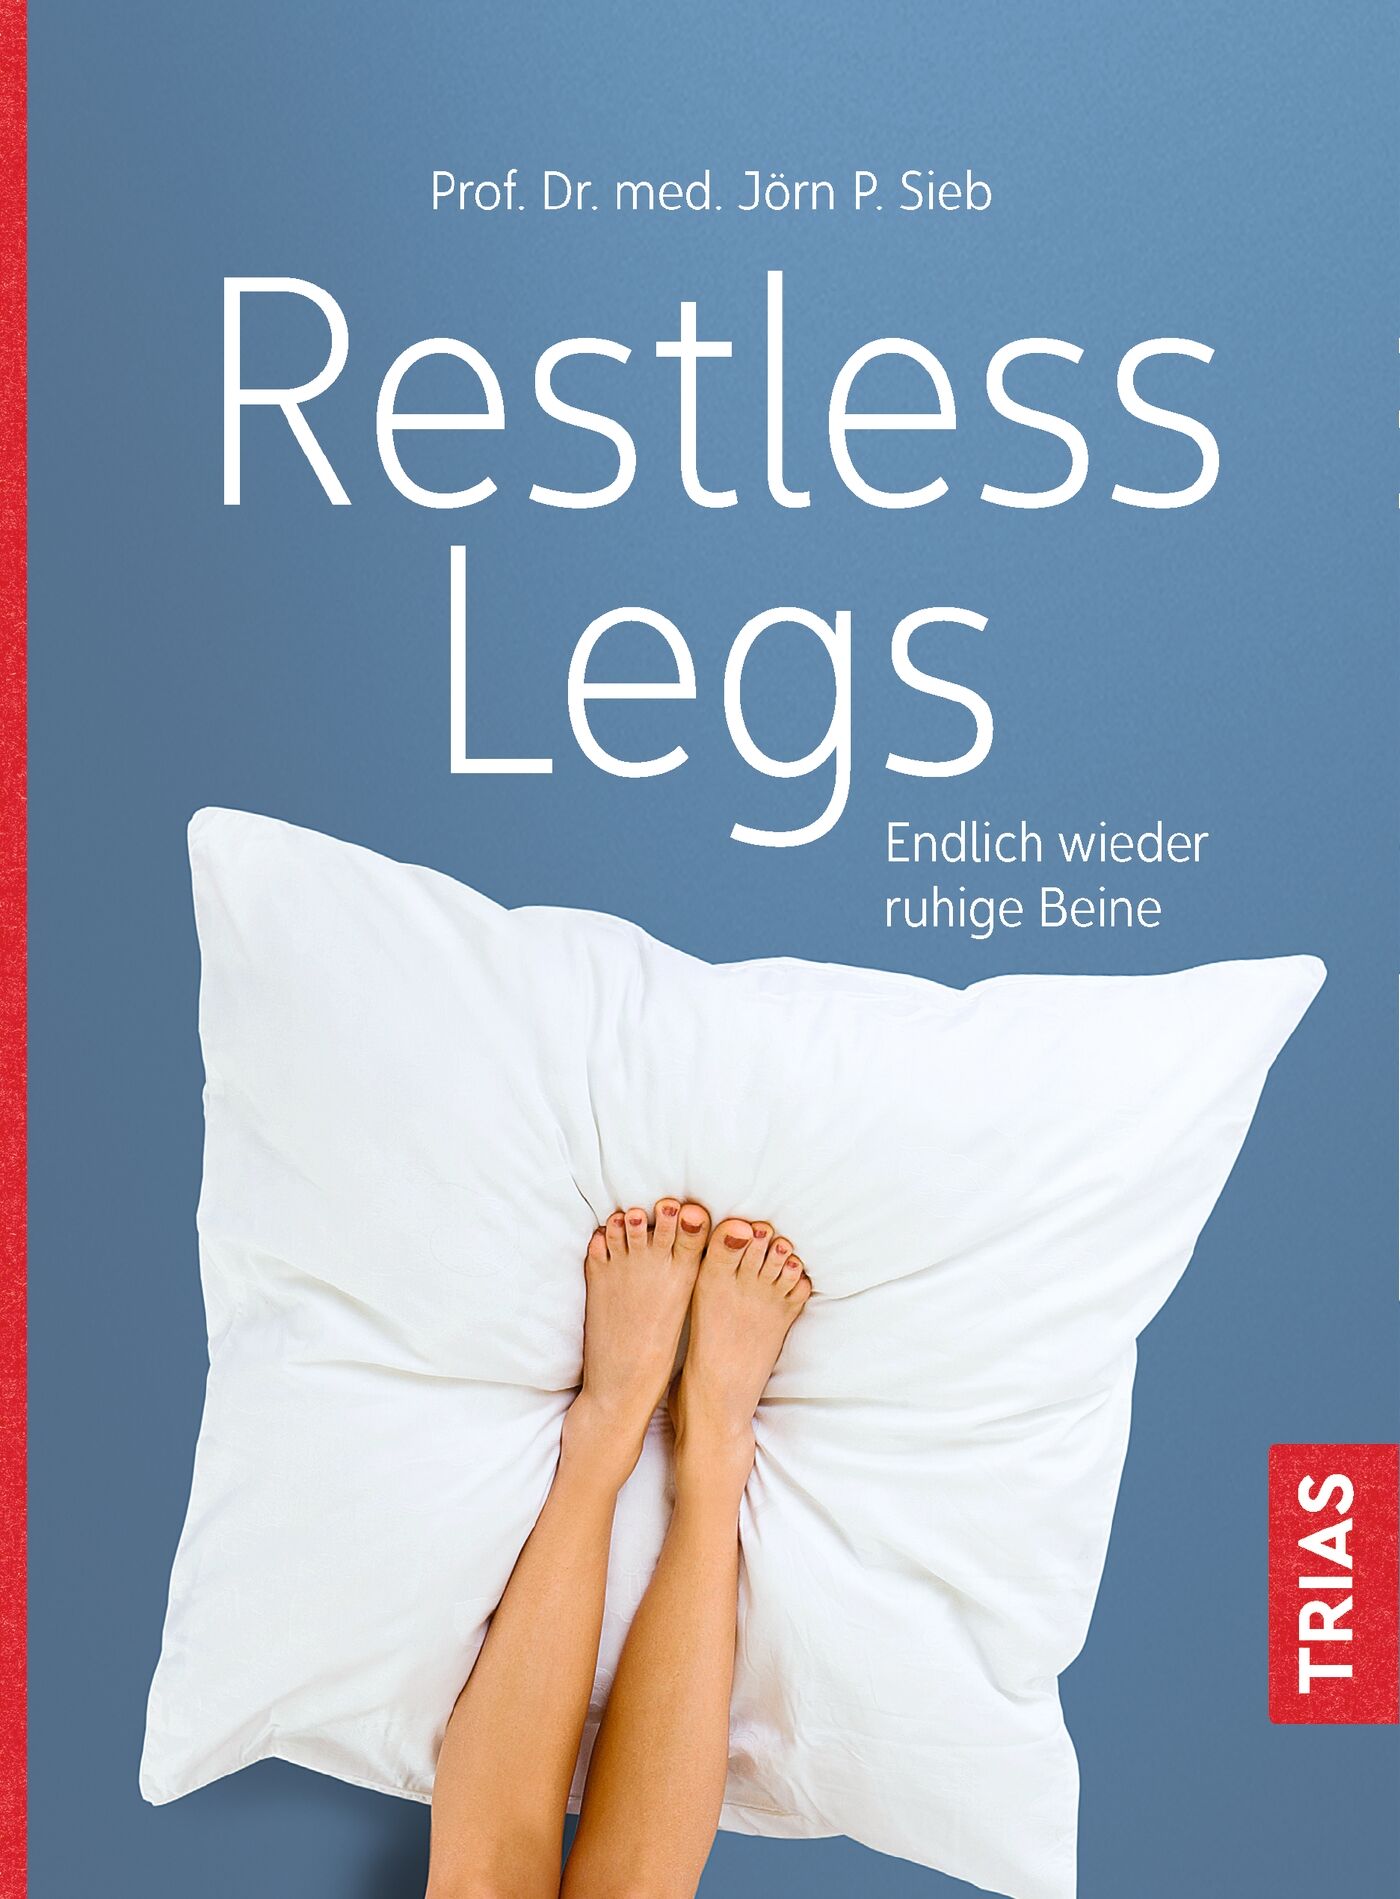 Restless Legs, 9783432100586